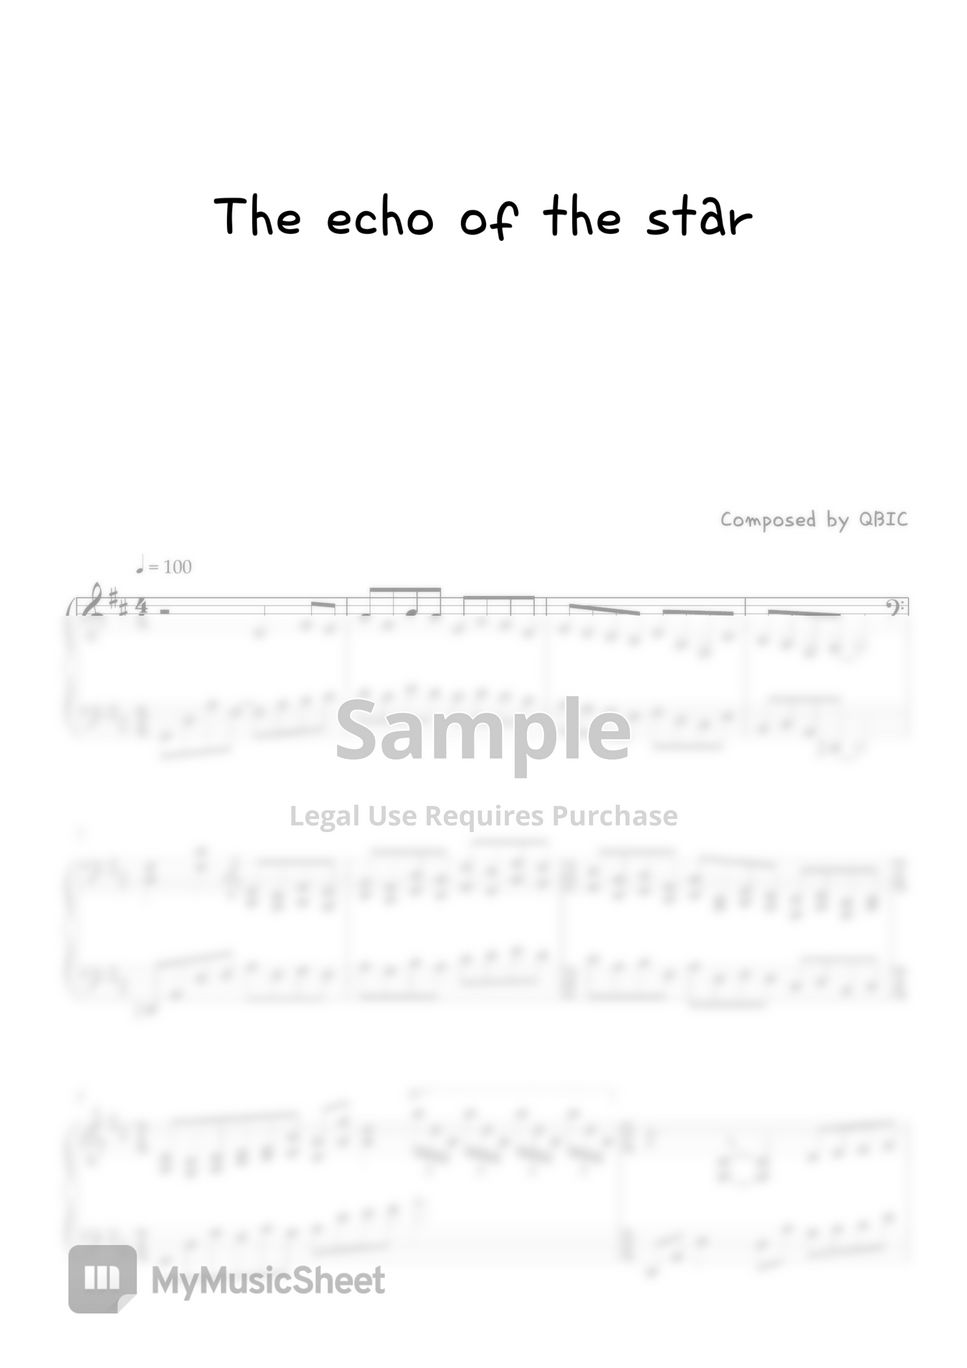 QBIC - The echo of the star